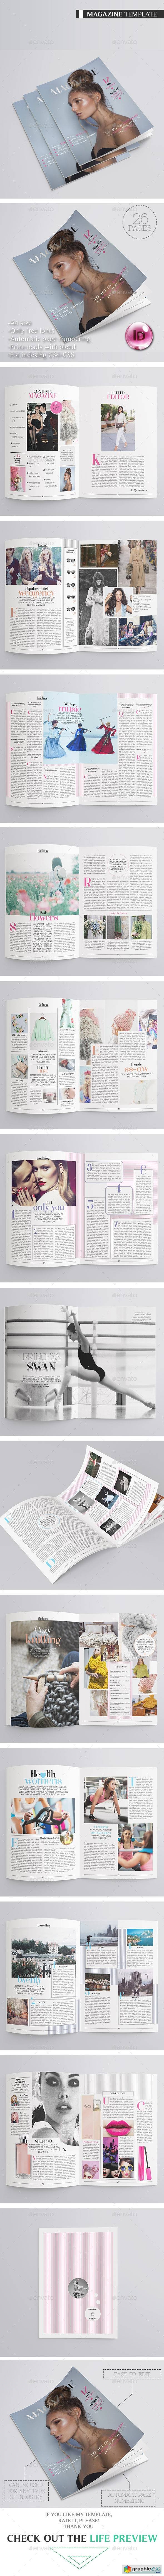 Fashion Magazine 26 Pages